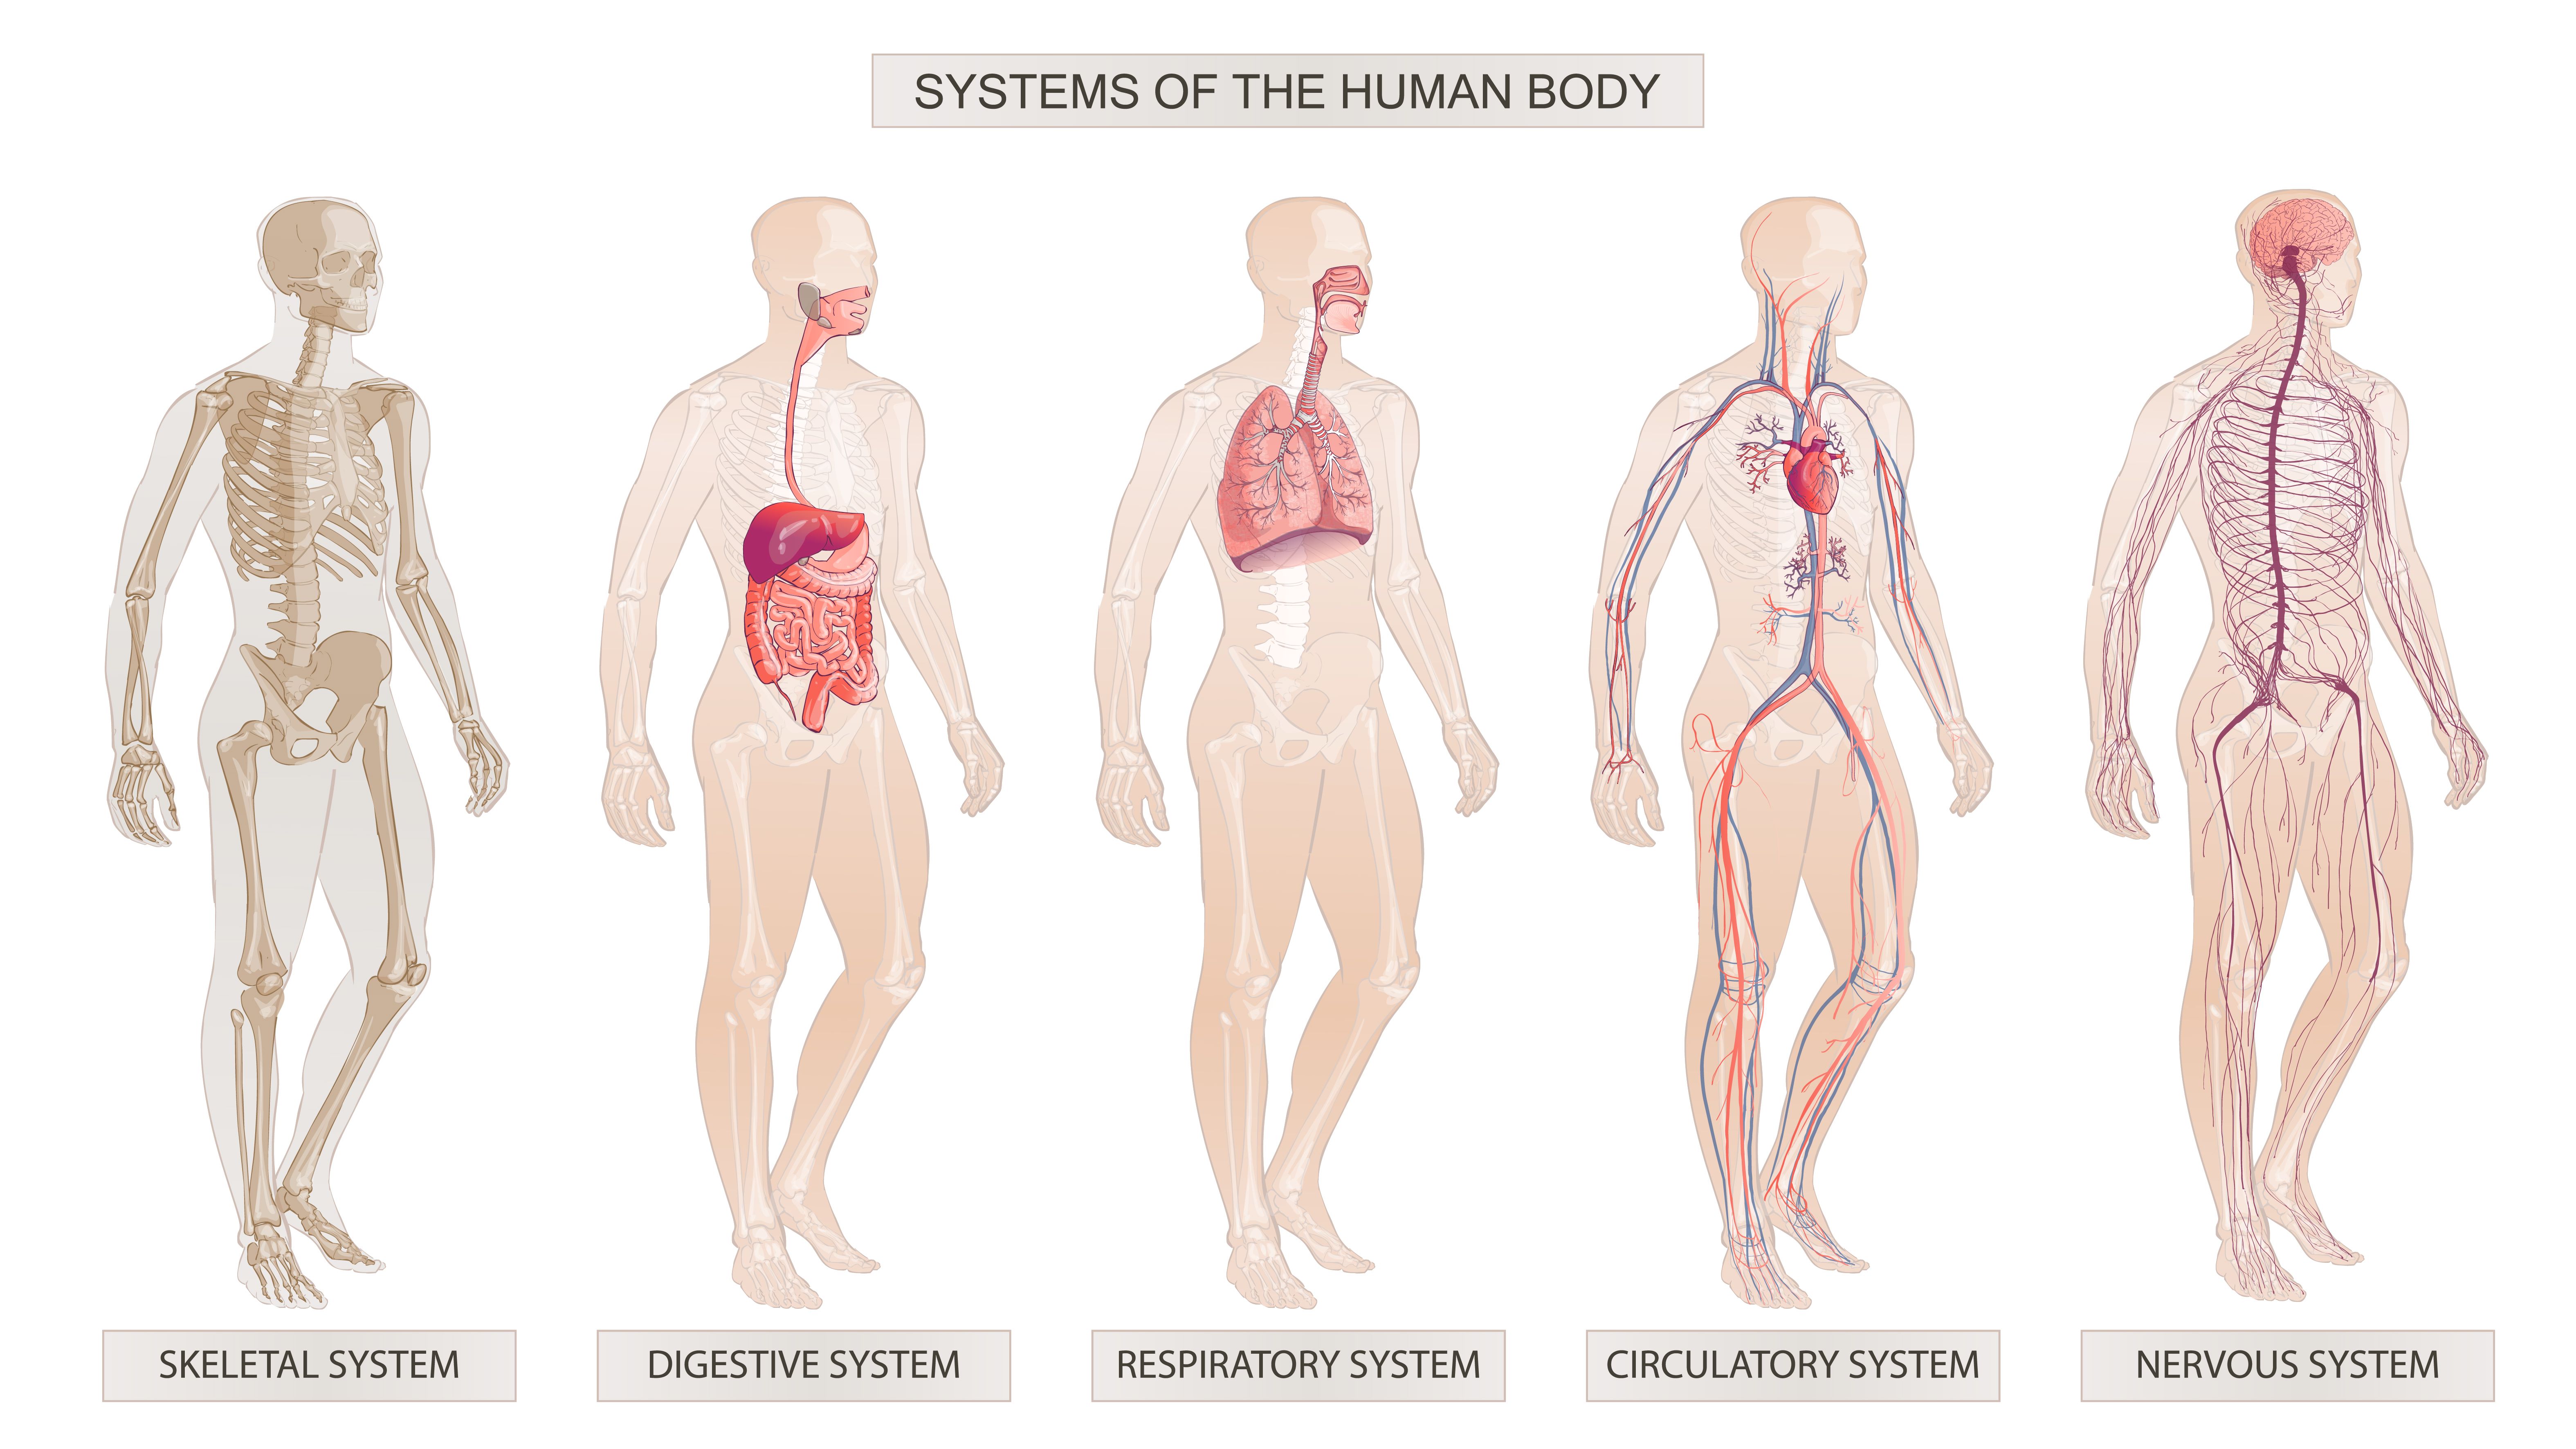 Skeletal, Digestive, Respiratory, Circulatory systems - Treatment @ MDIMC